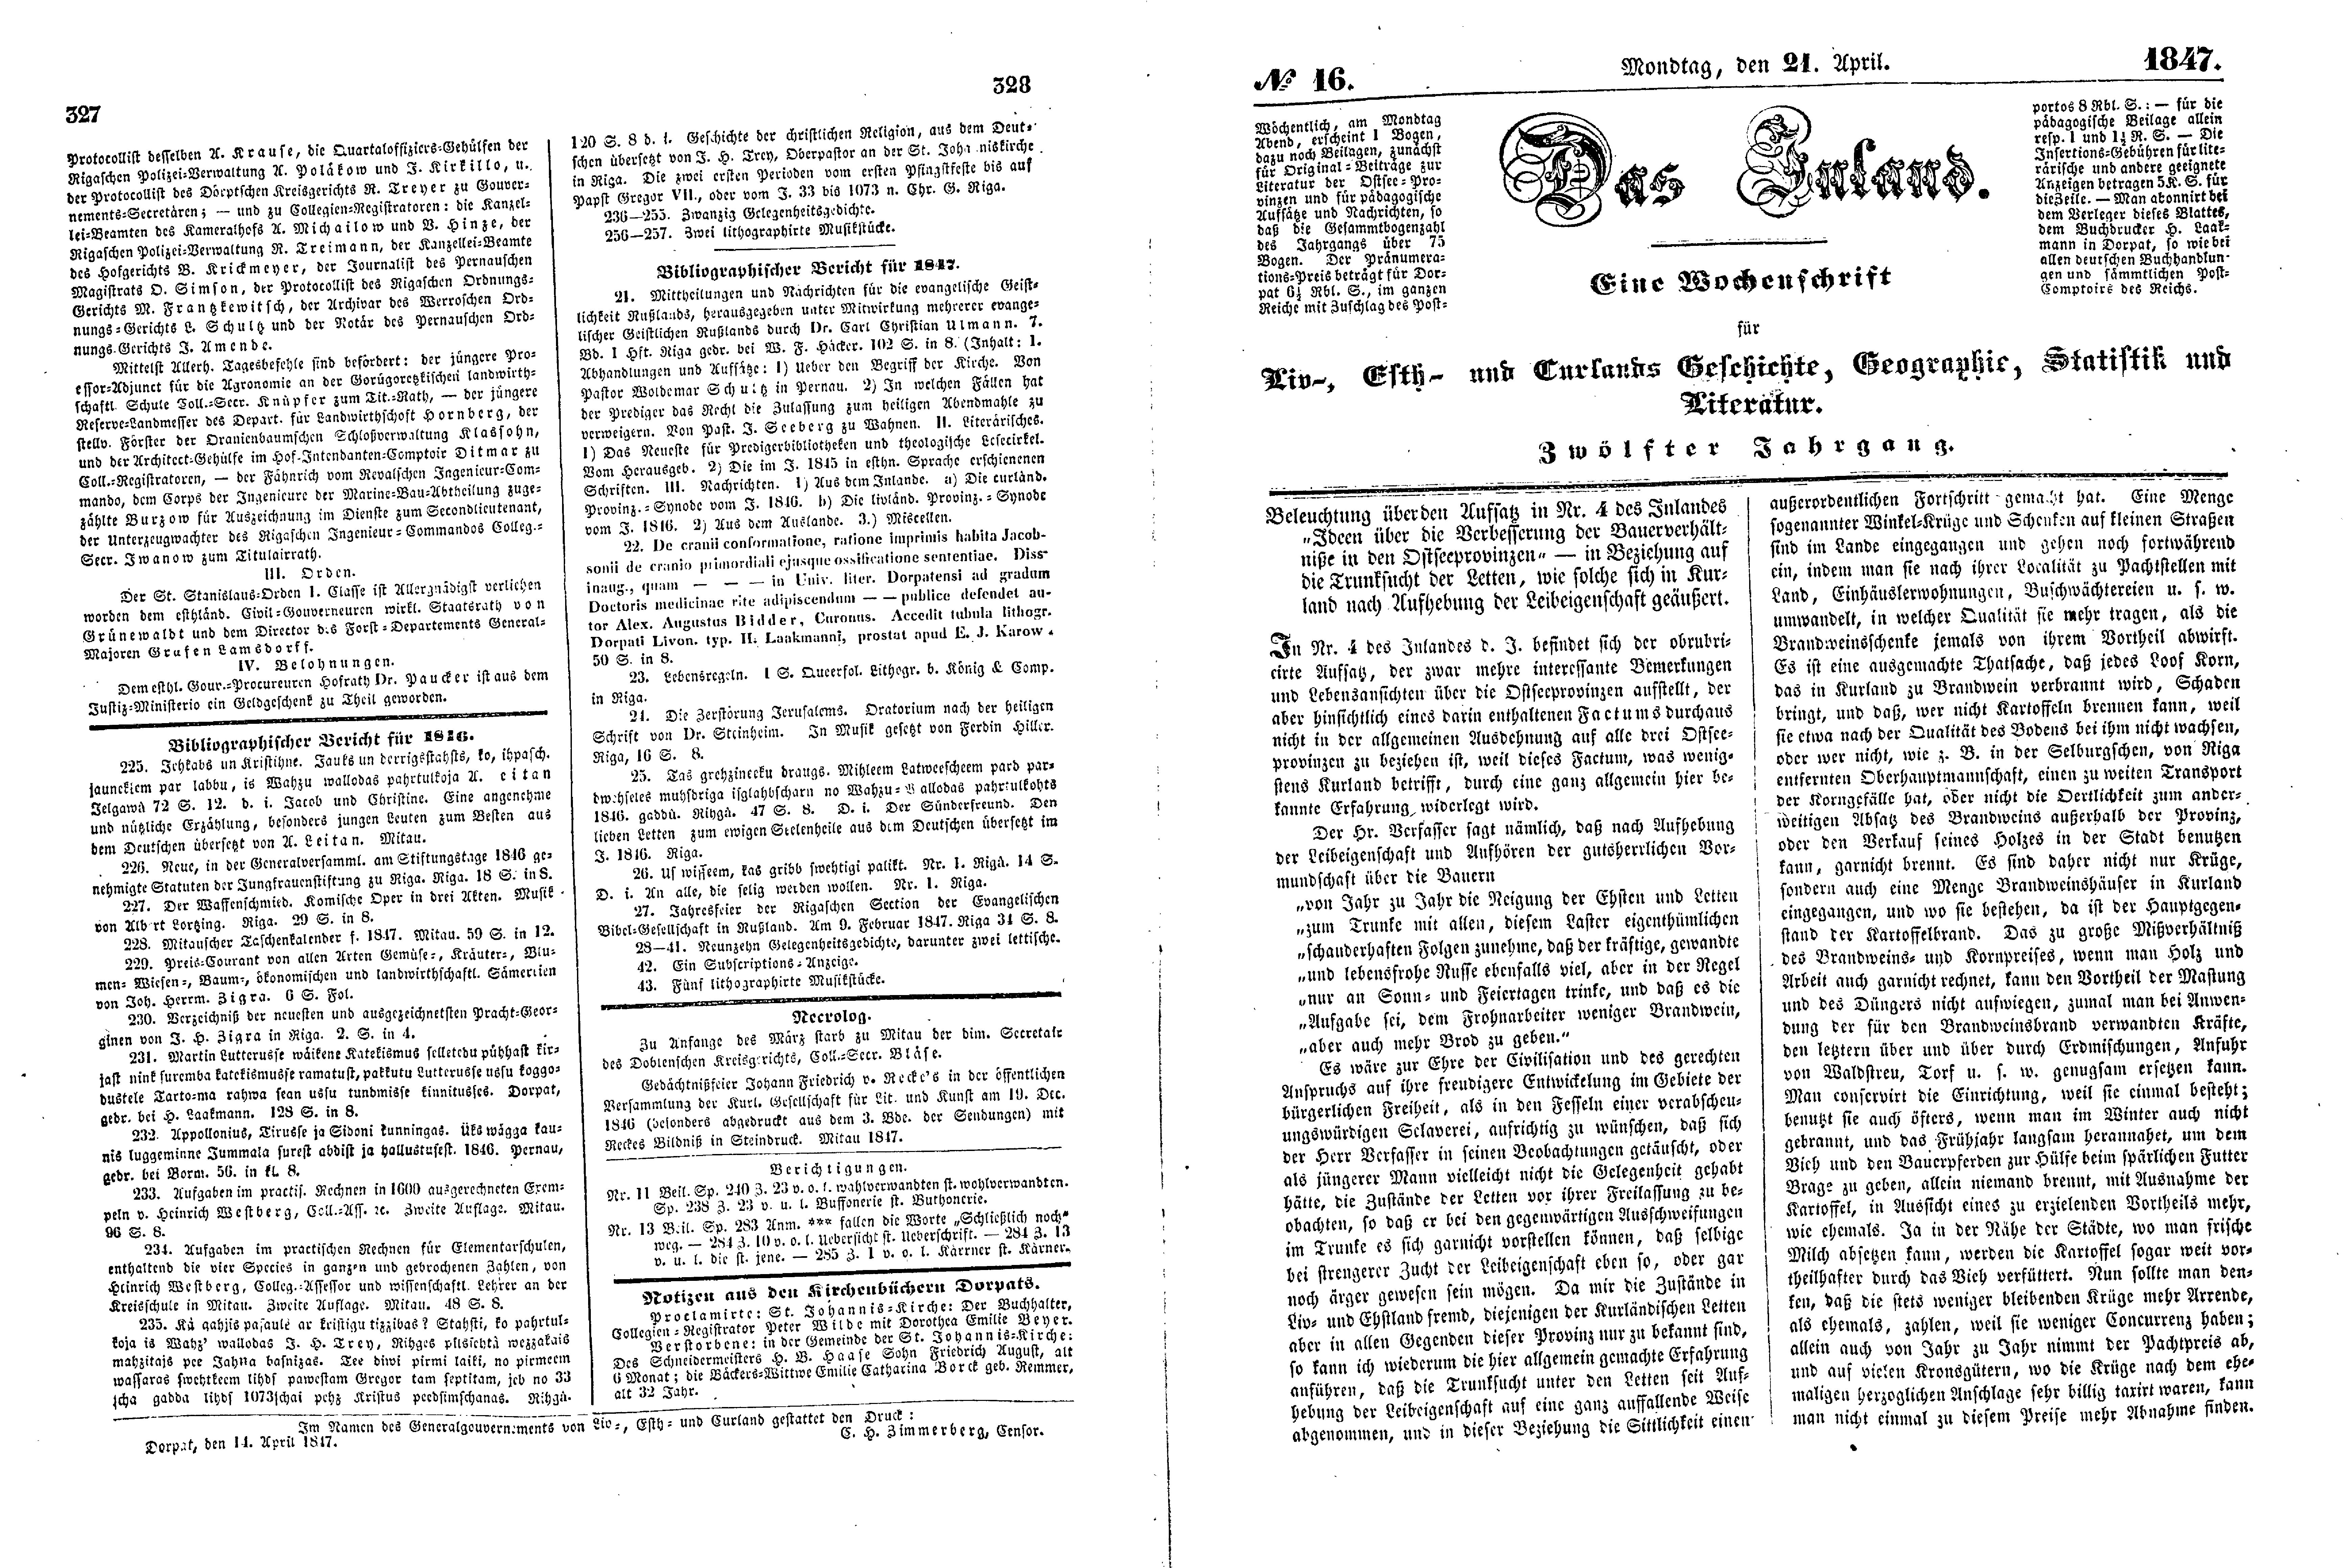 Das Inland [12] (1847) | 87. (327-330) Main body of text